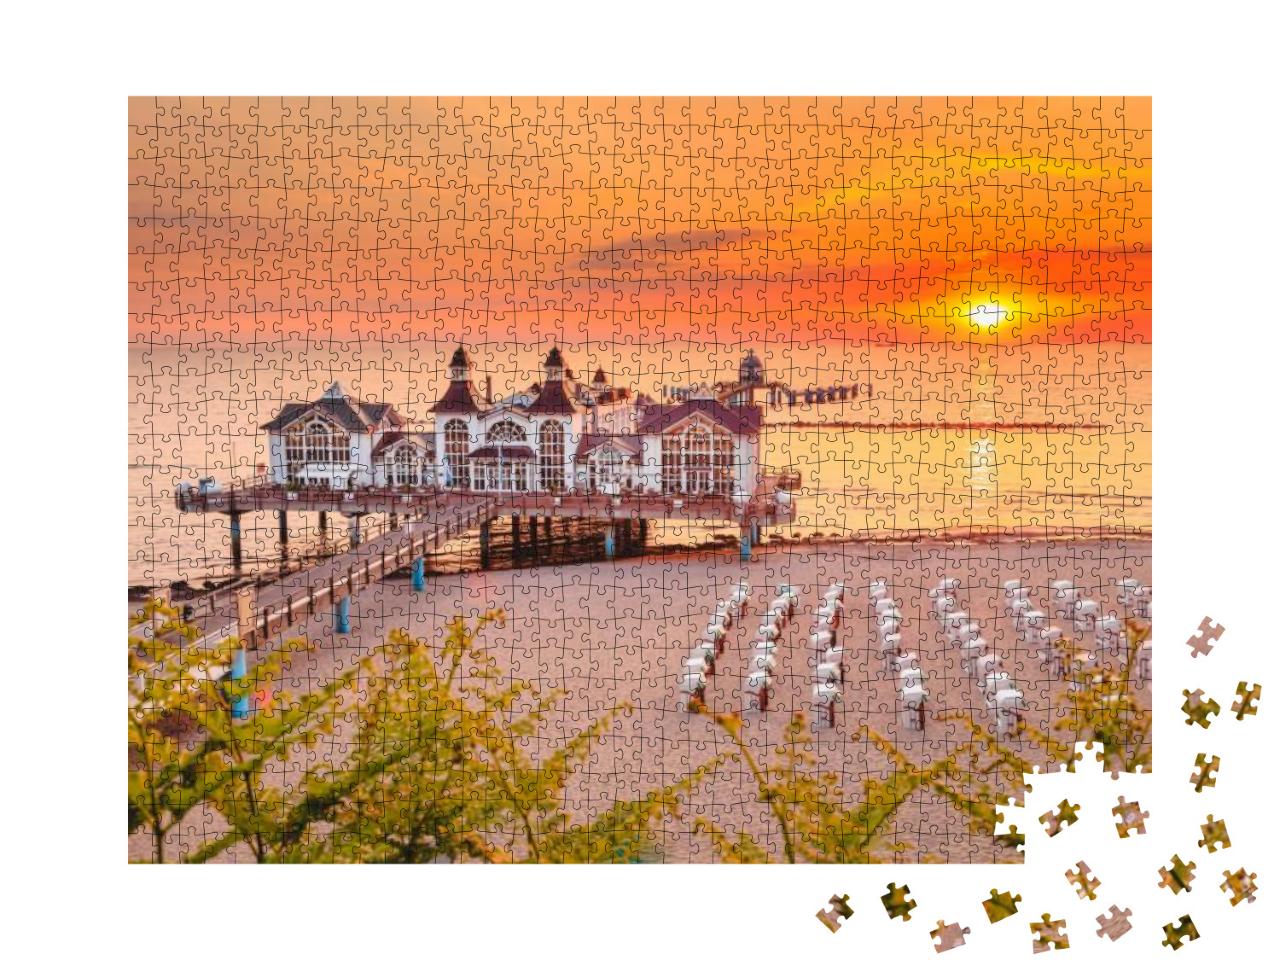 Puzzle 1000 Teile „Goldener Morgen an der Selliner Seebrücke, Ostseebad Sellin, Deutschland“